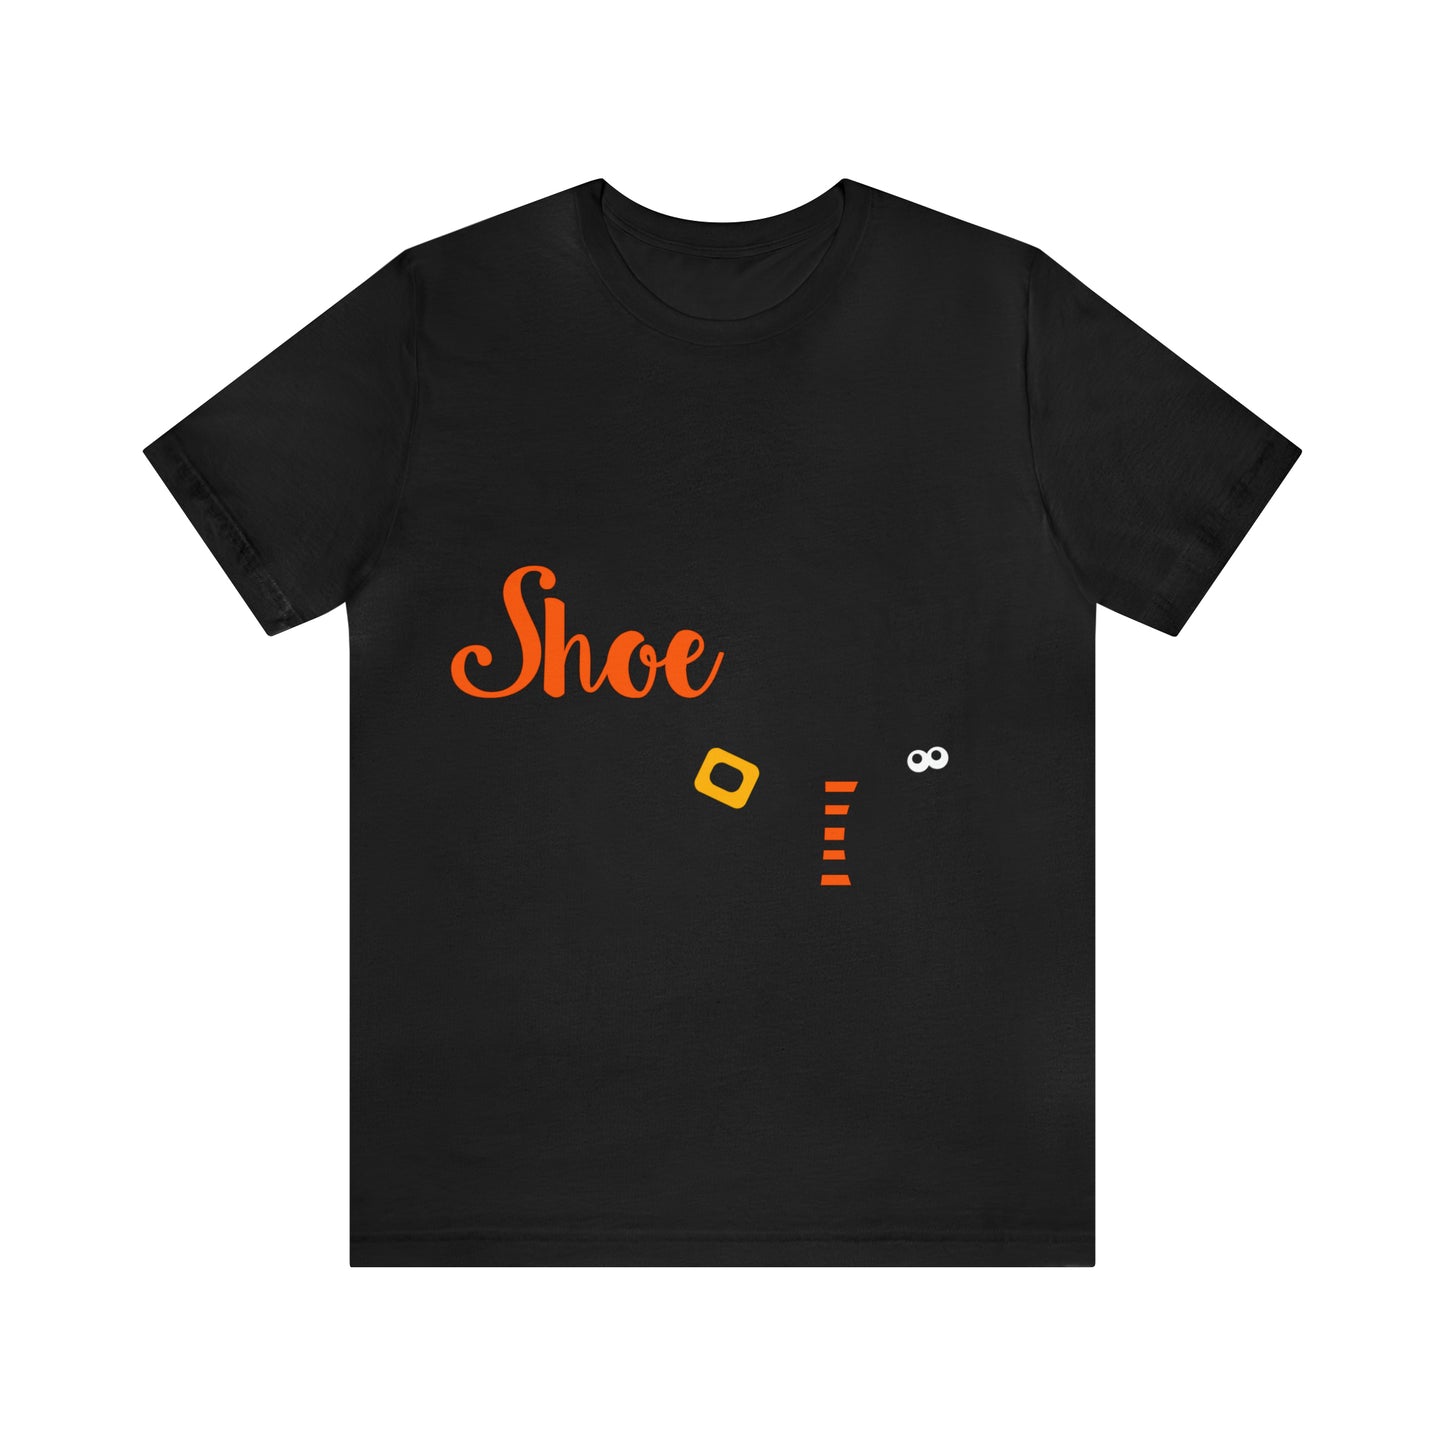 If The Shoe Fits - Unisex T-Shirt